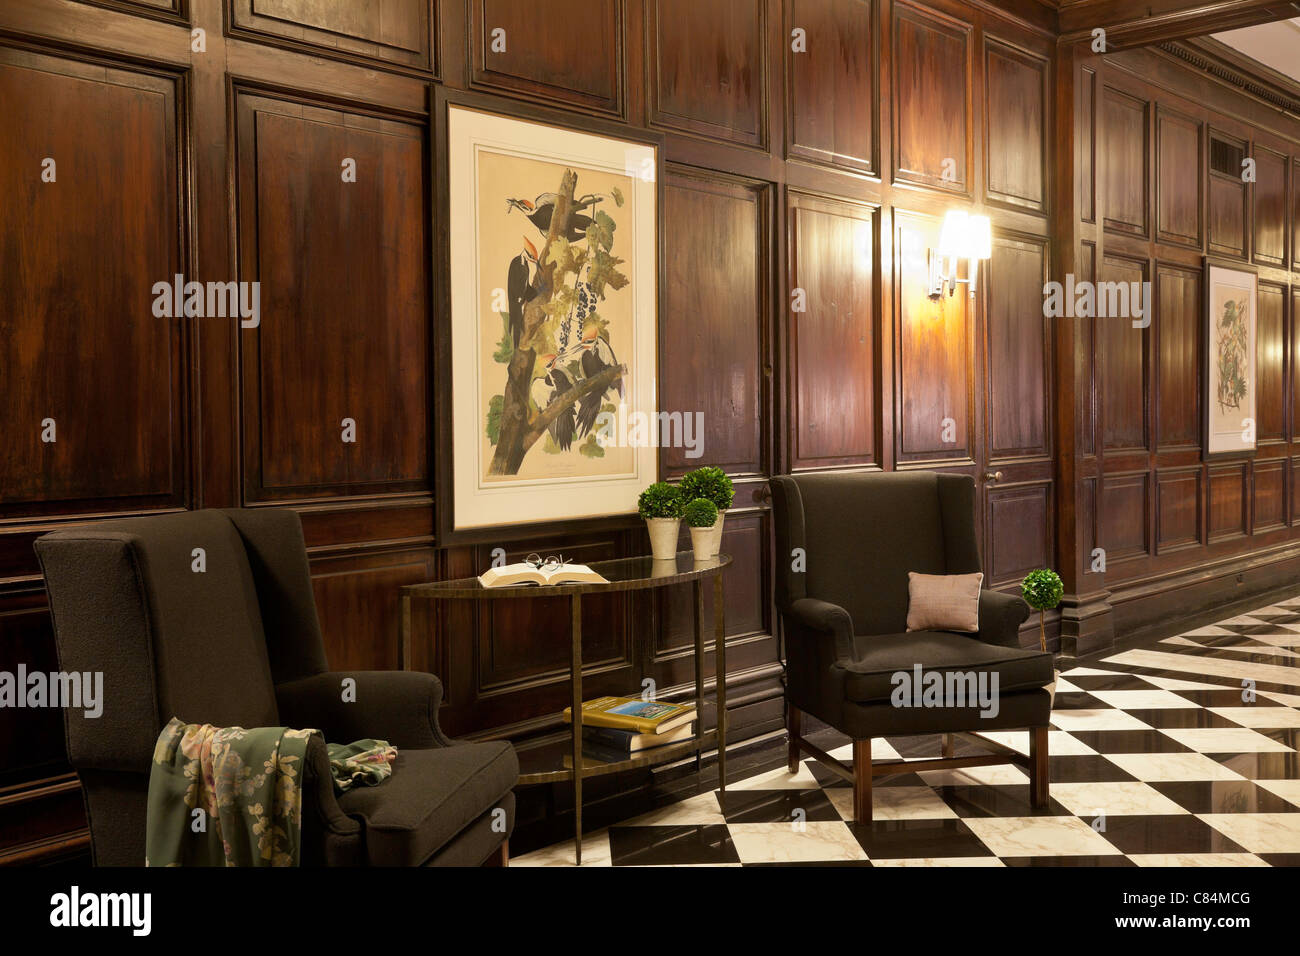 Holzvertäfelte Vintage Hotel-Lobby Interieur mit Audubon Drucke, NYC Stockfoto